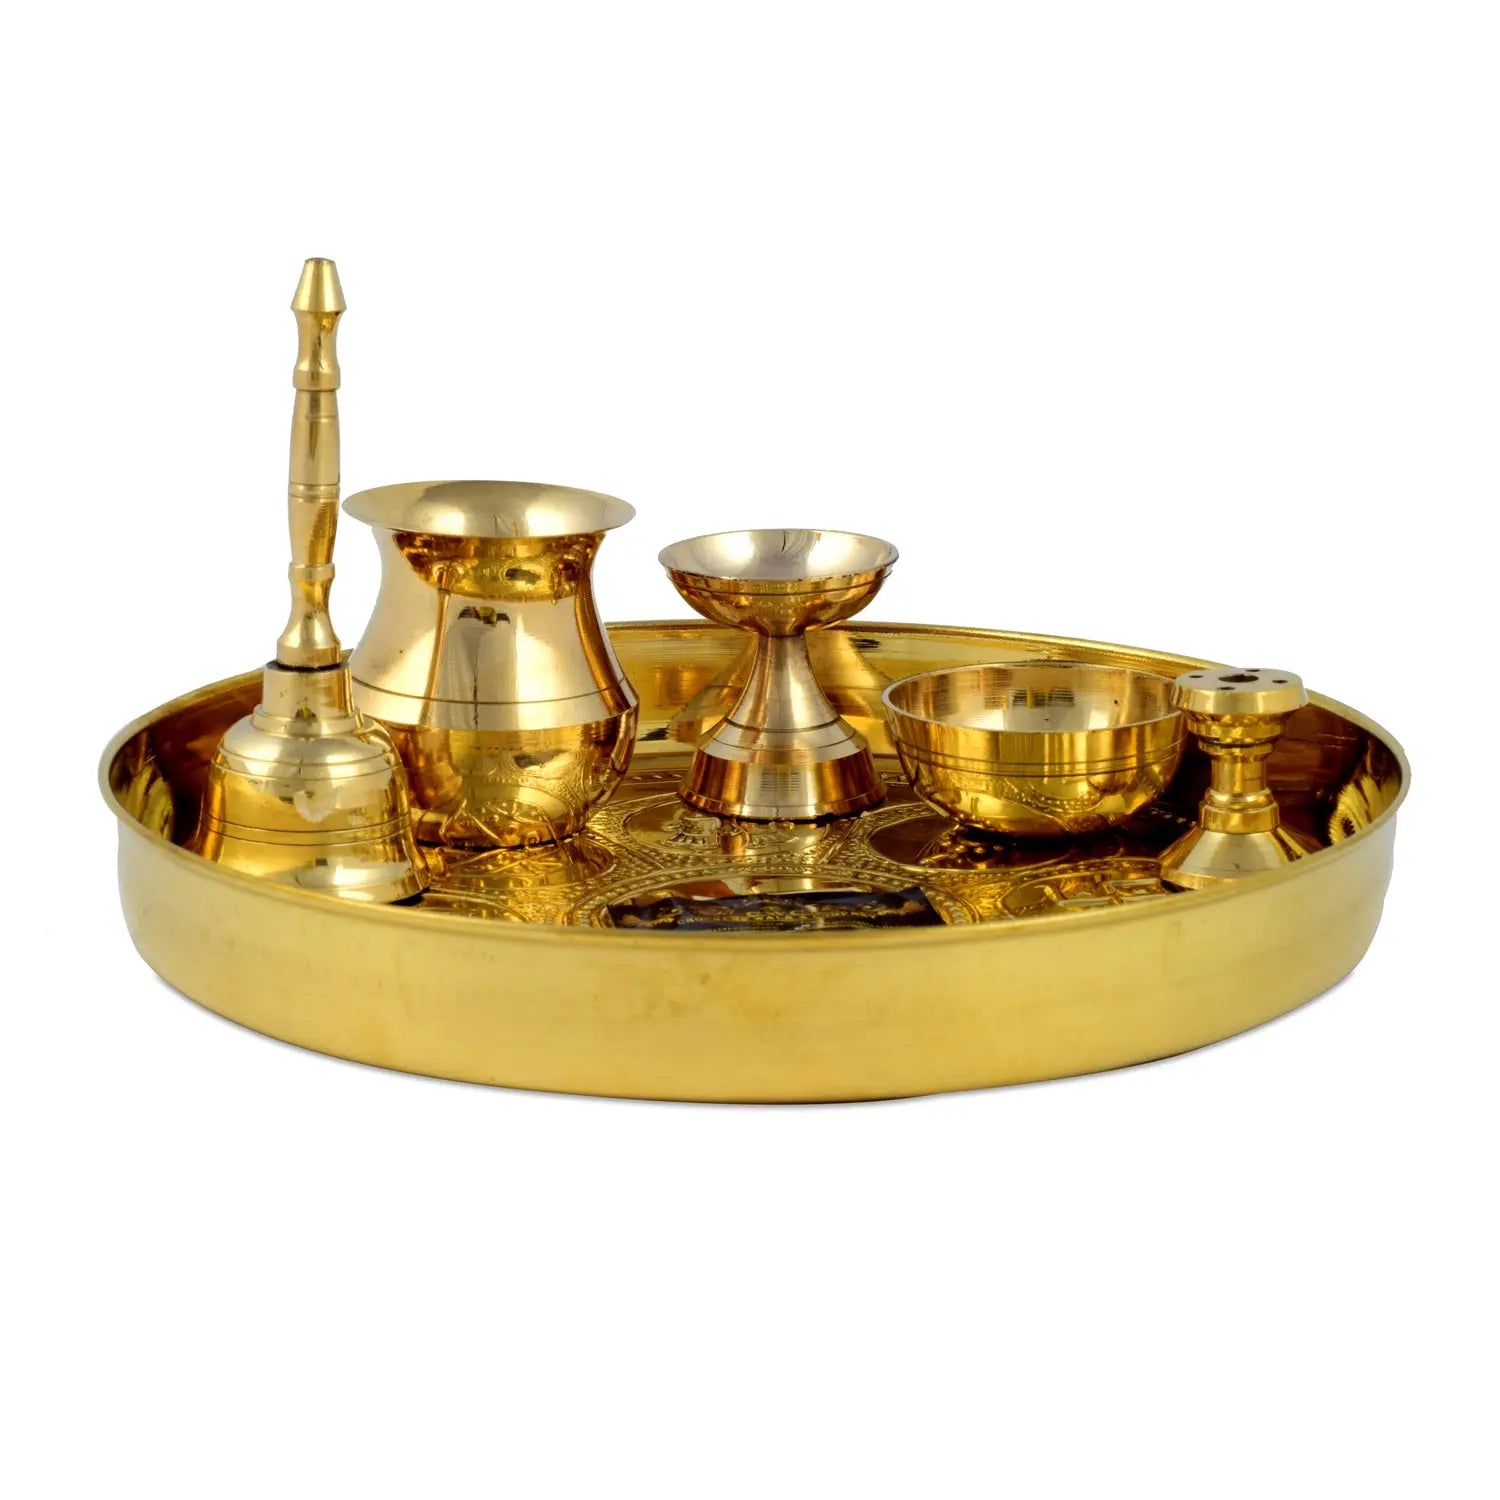 Asthmangal Brass Thali Set for Pooja/lakshmipooja/diwalipooja/gifting - CROCKERY WALA AND COMPANY 